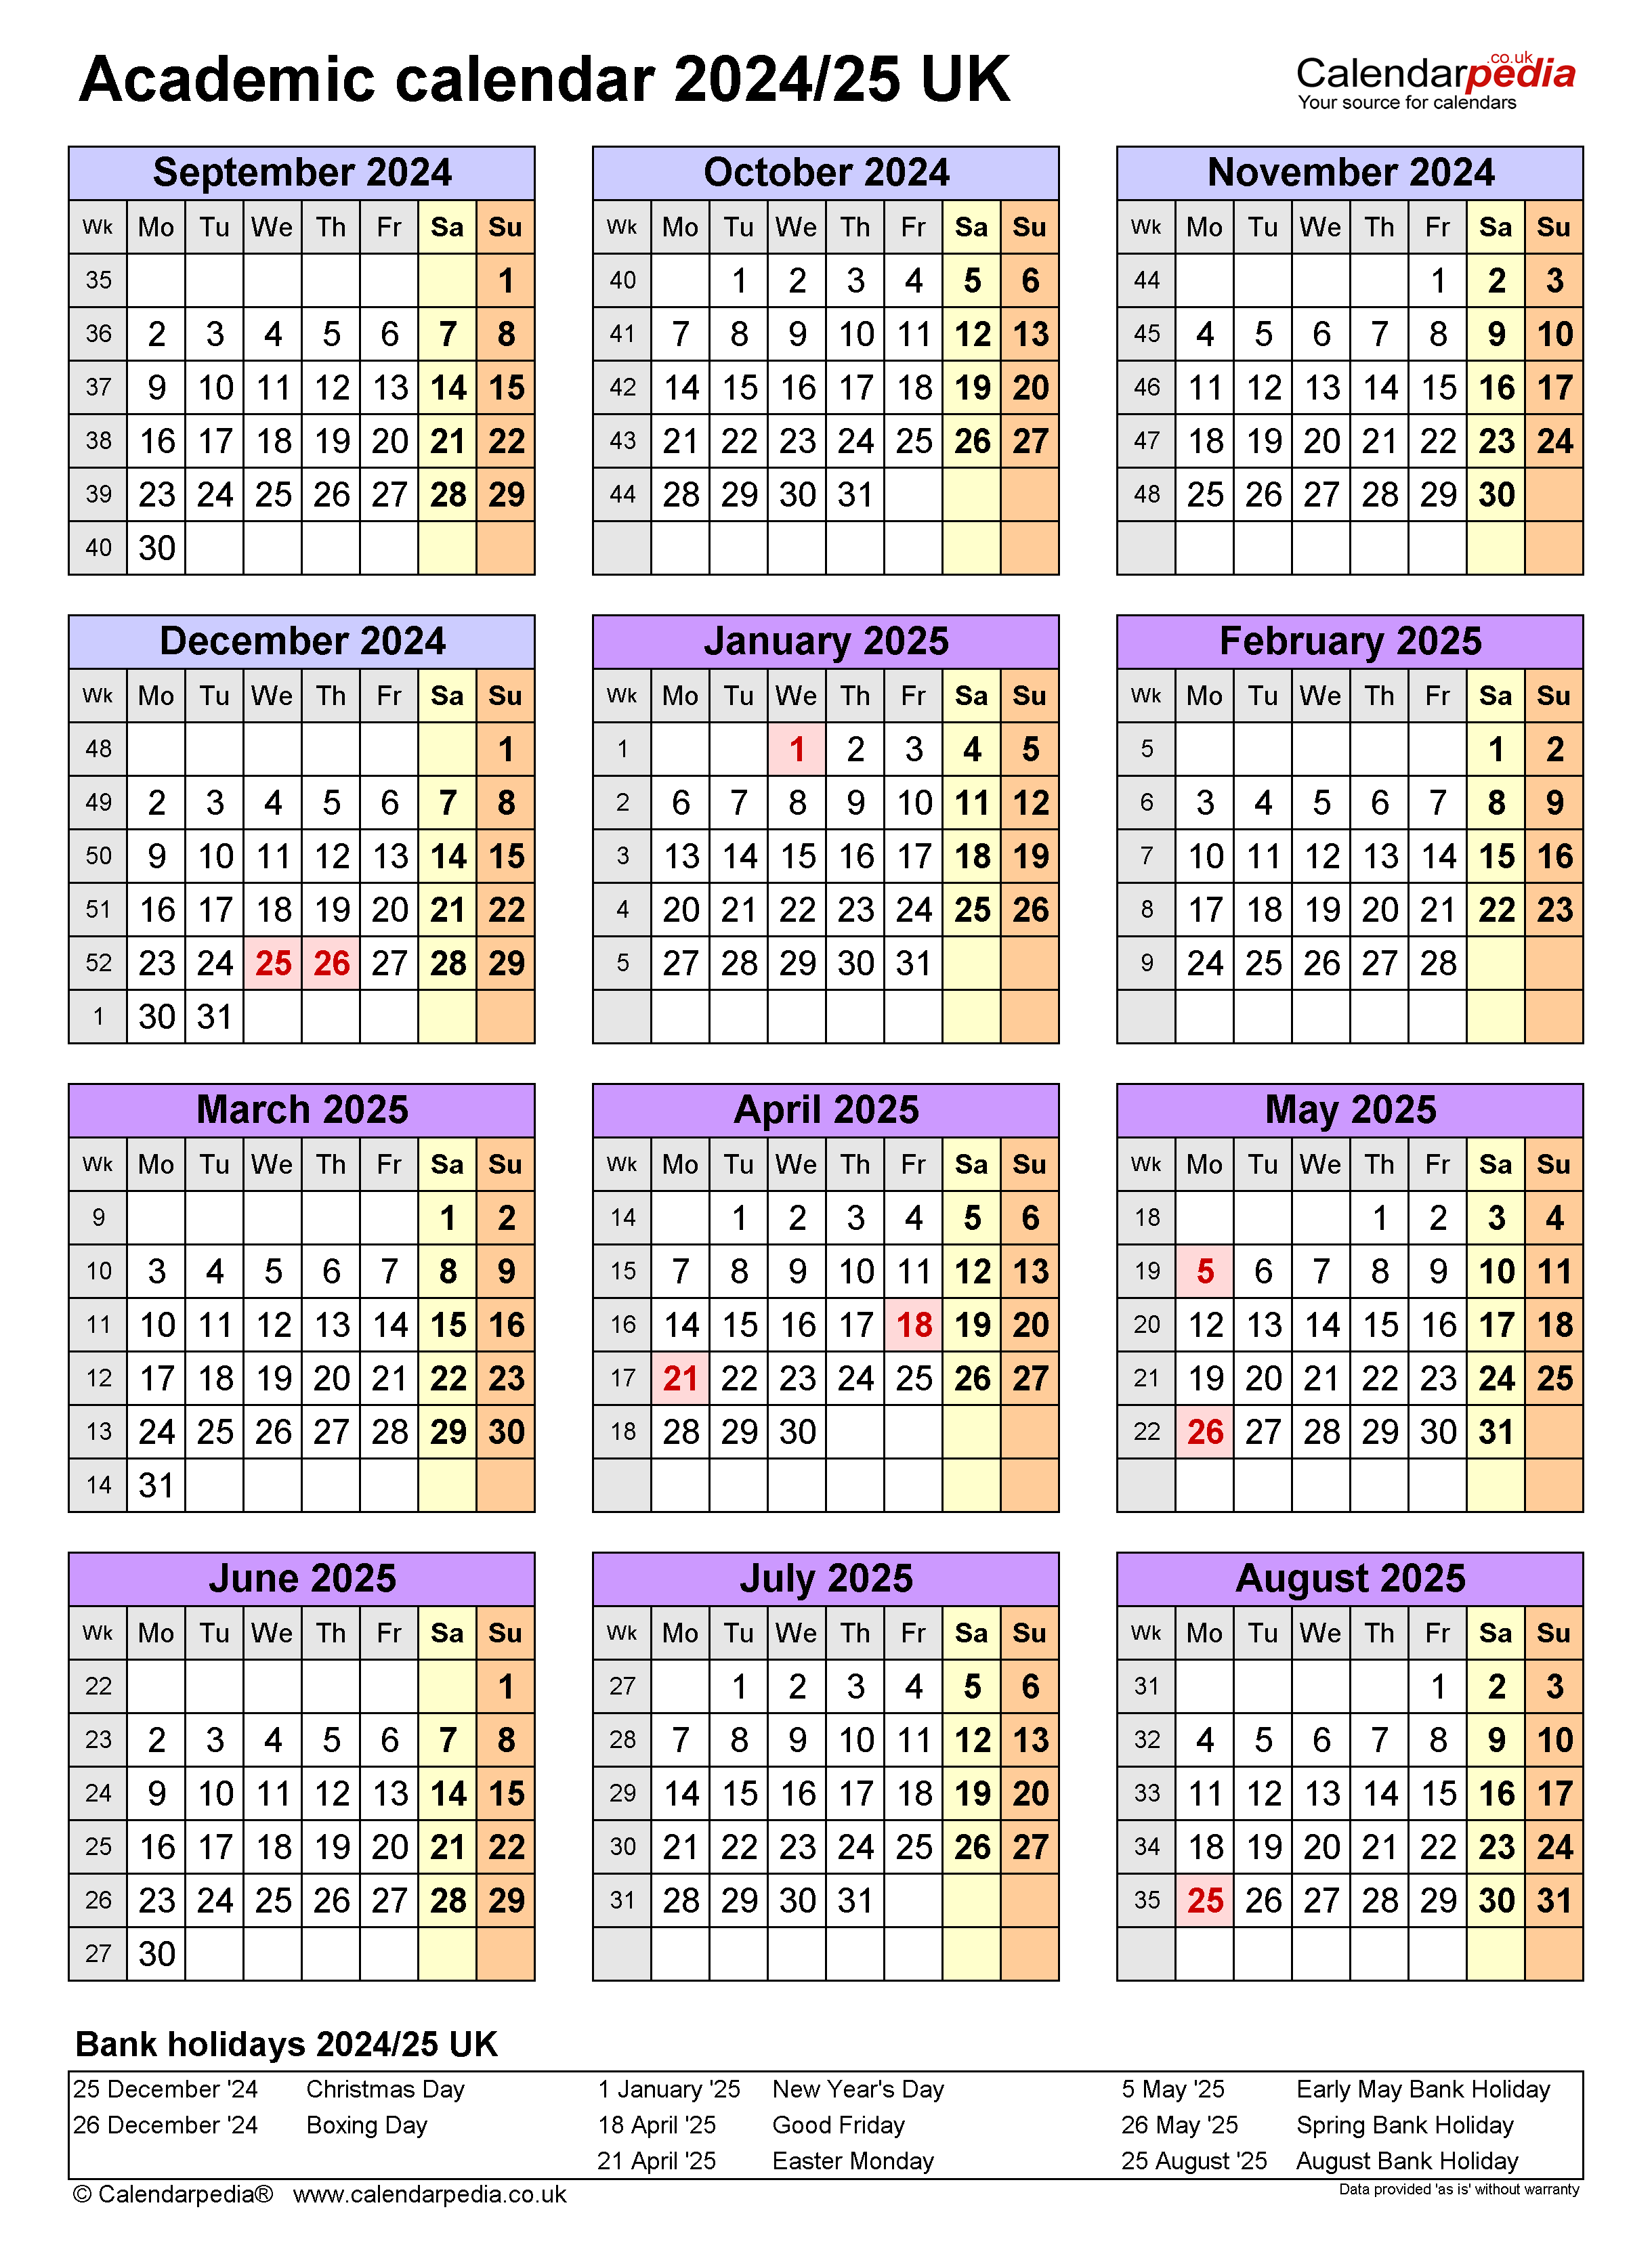 Academic Calendars 2024 25 UK Free Printable Word Templates - Free Printable Academic Calendar 2024-2025